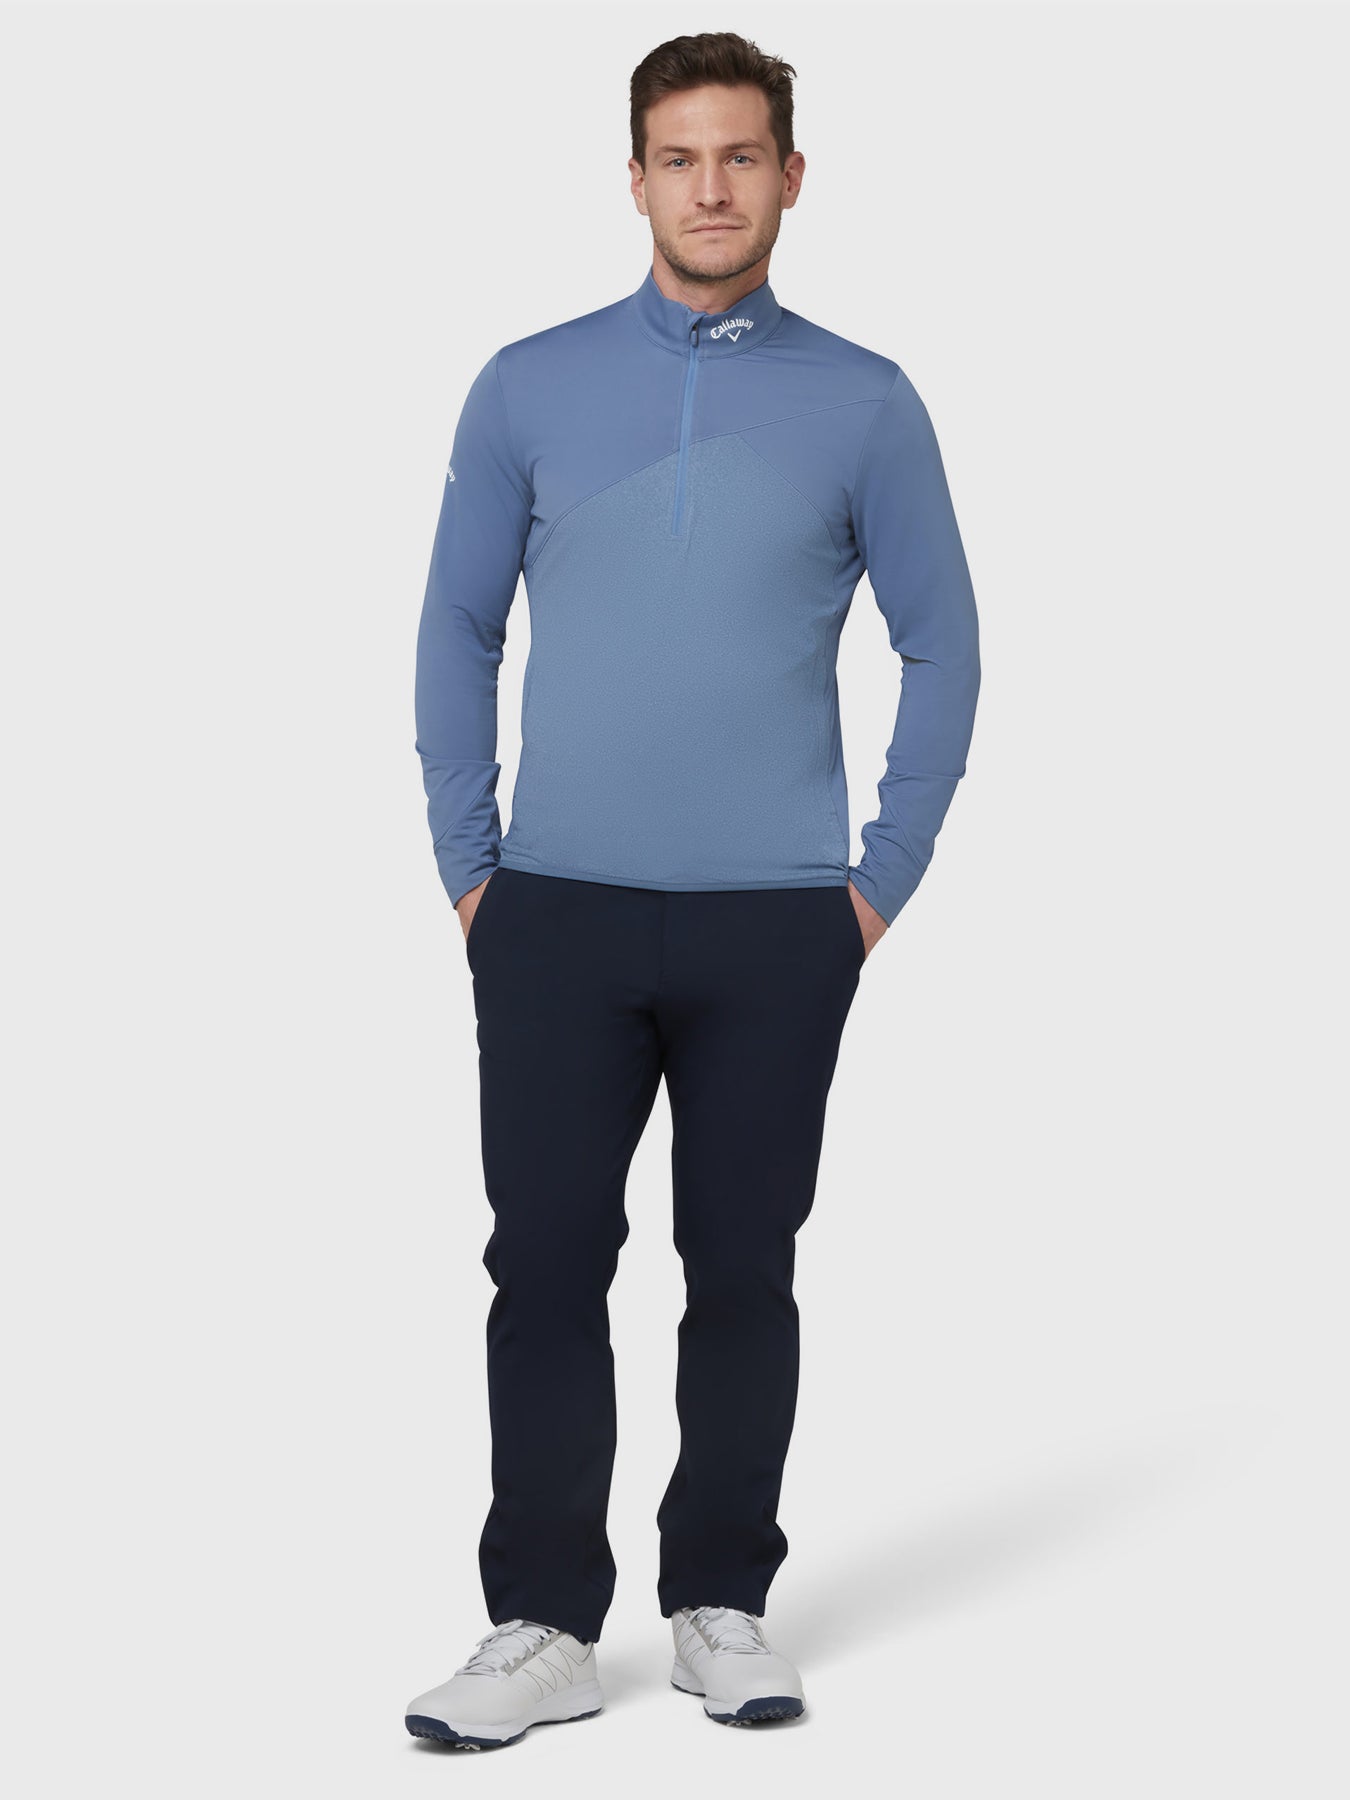 View Aquapel Ultra Light Quarter Zip Sweatshirt In Blue Horizon Blue Horizon XL information